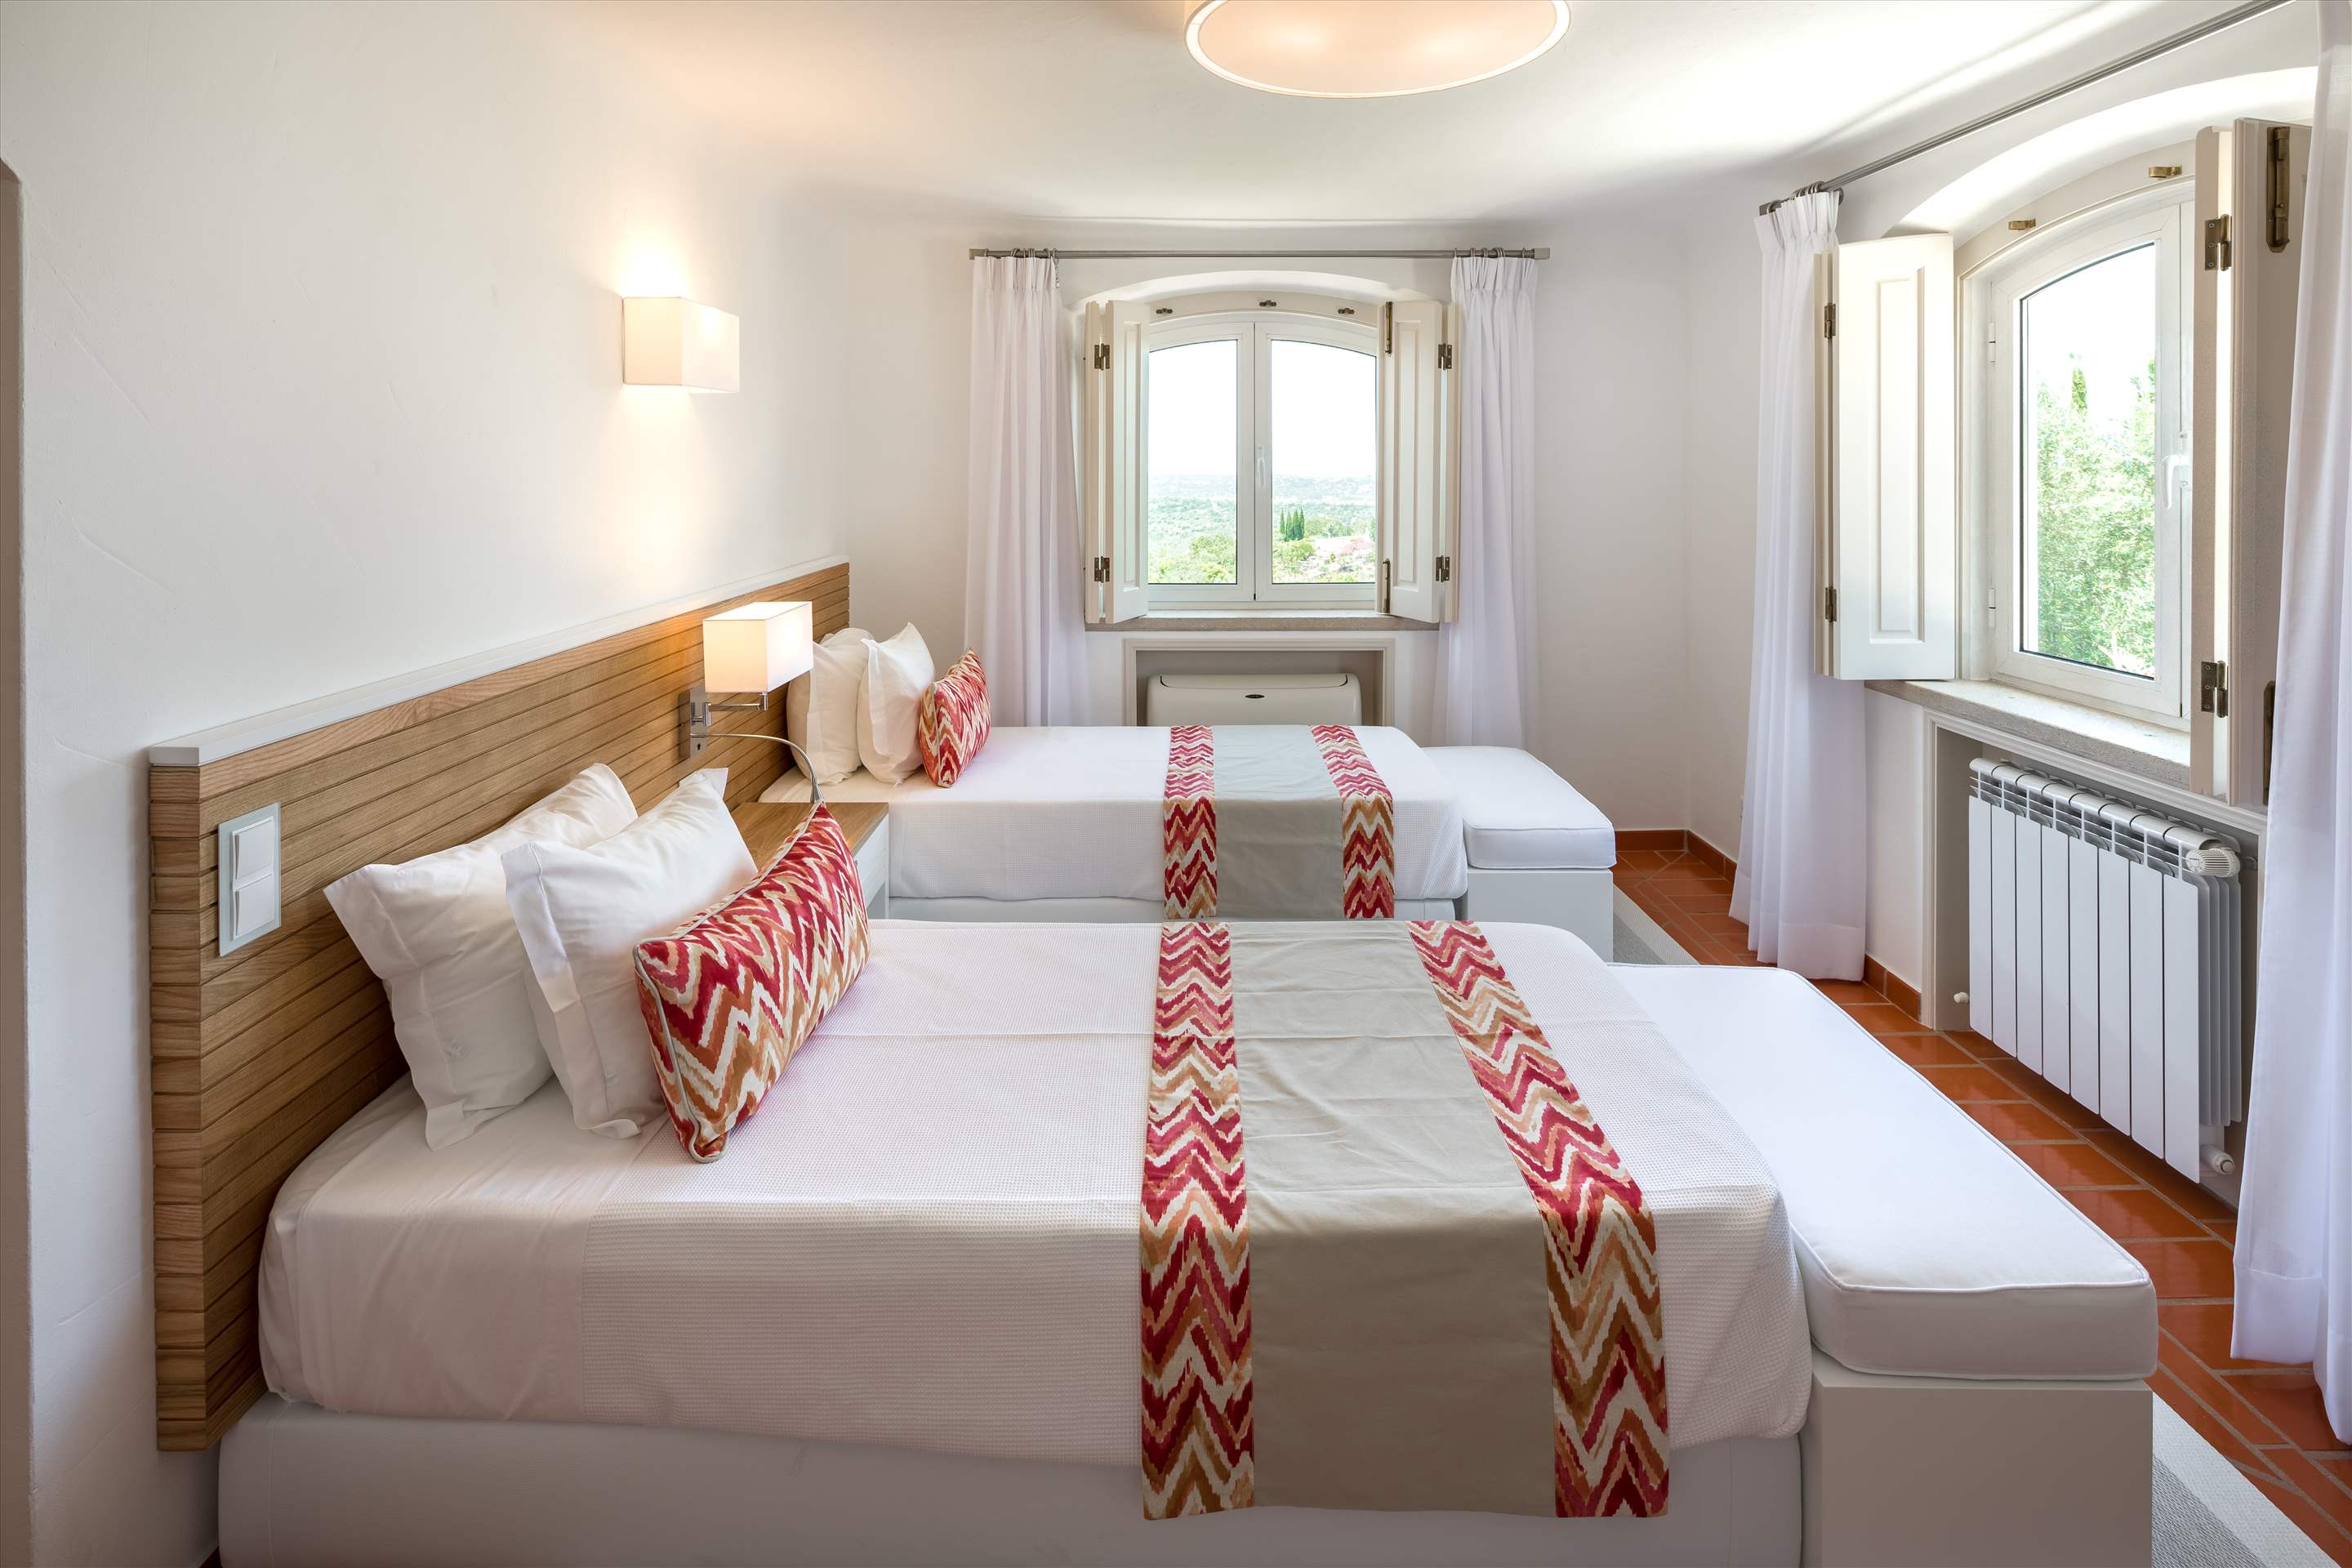 Casa da Montanha, 15-16 persons, 9 bedroom villa in Vilamoura Area, Algarve Photo #25